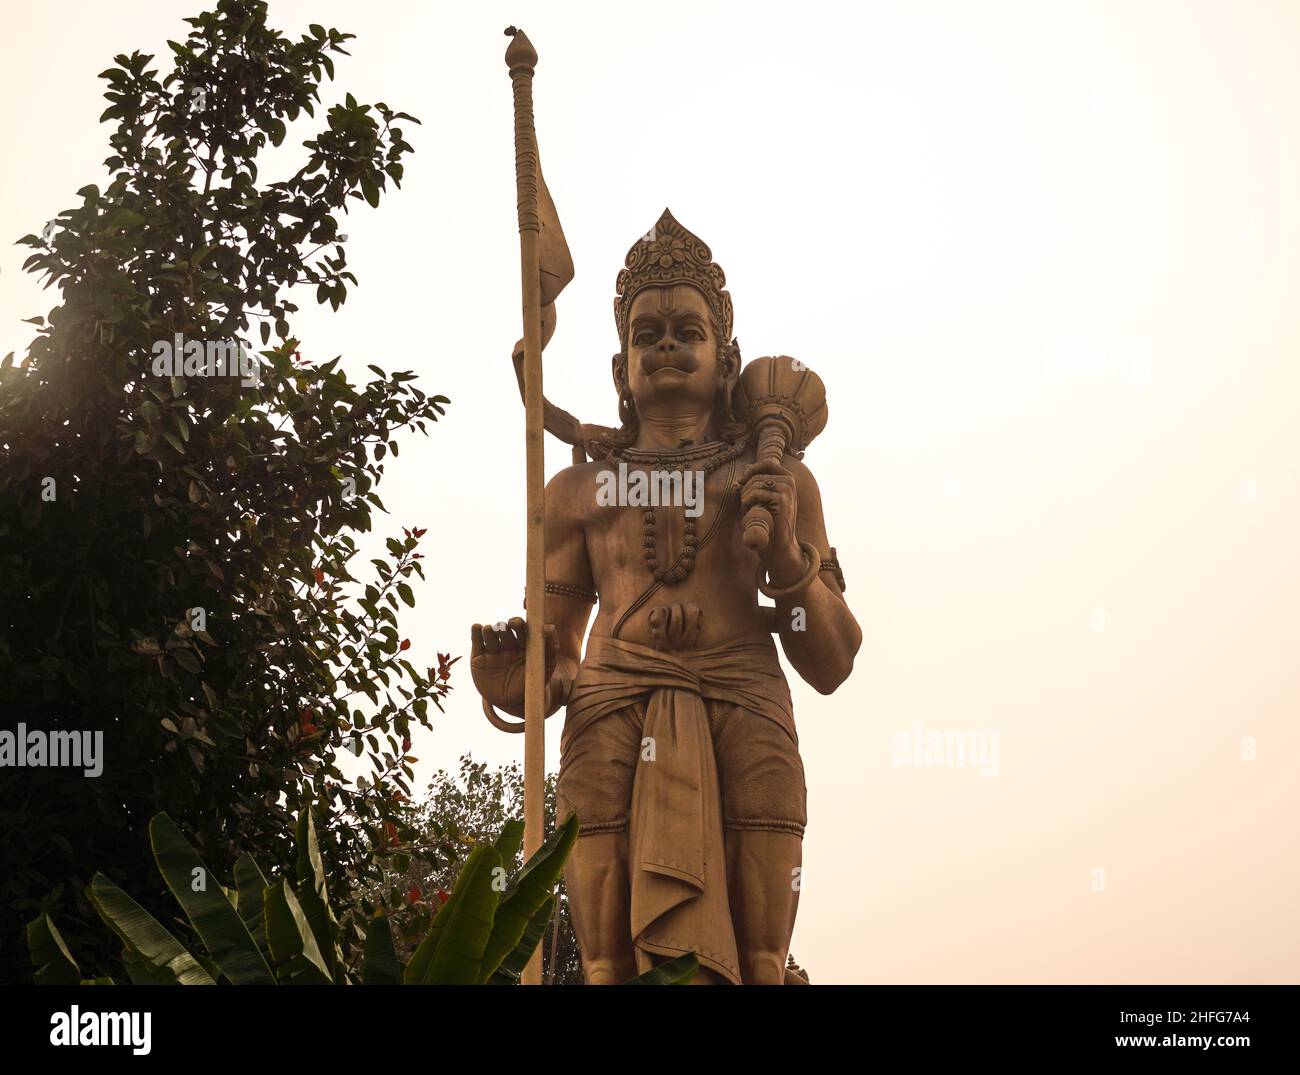 statue of god hanumaan in sky hindu god statue image Stock Photo